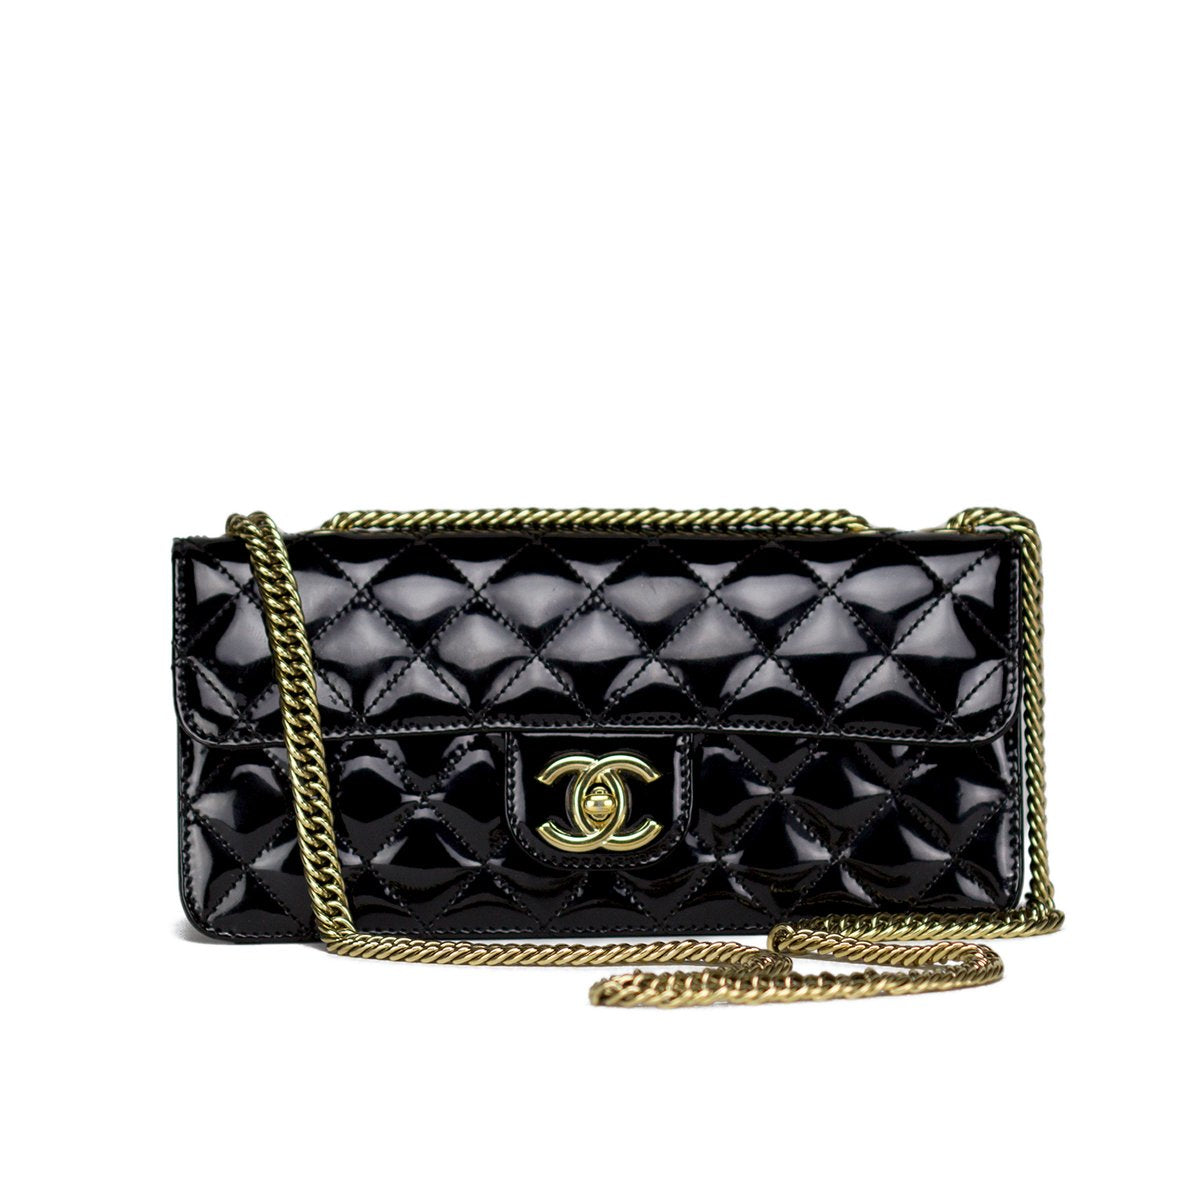 Rare Chanel Handbag 